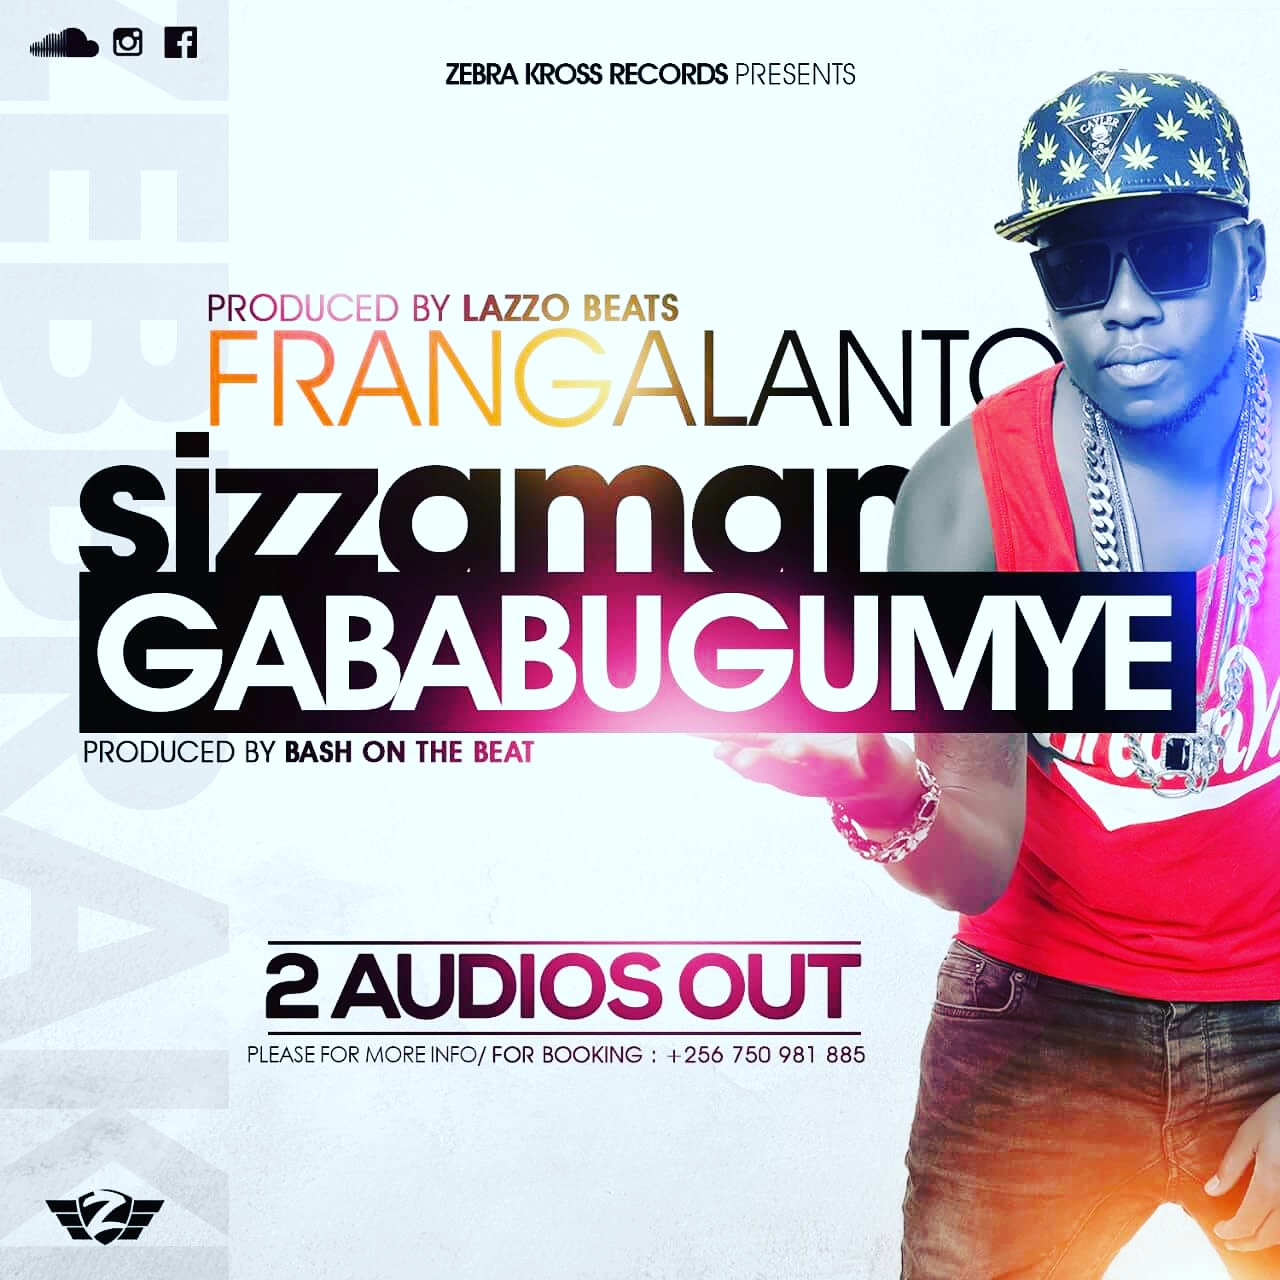 A disc of Sizzaman's audio version of Gababugumye.